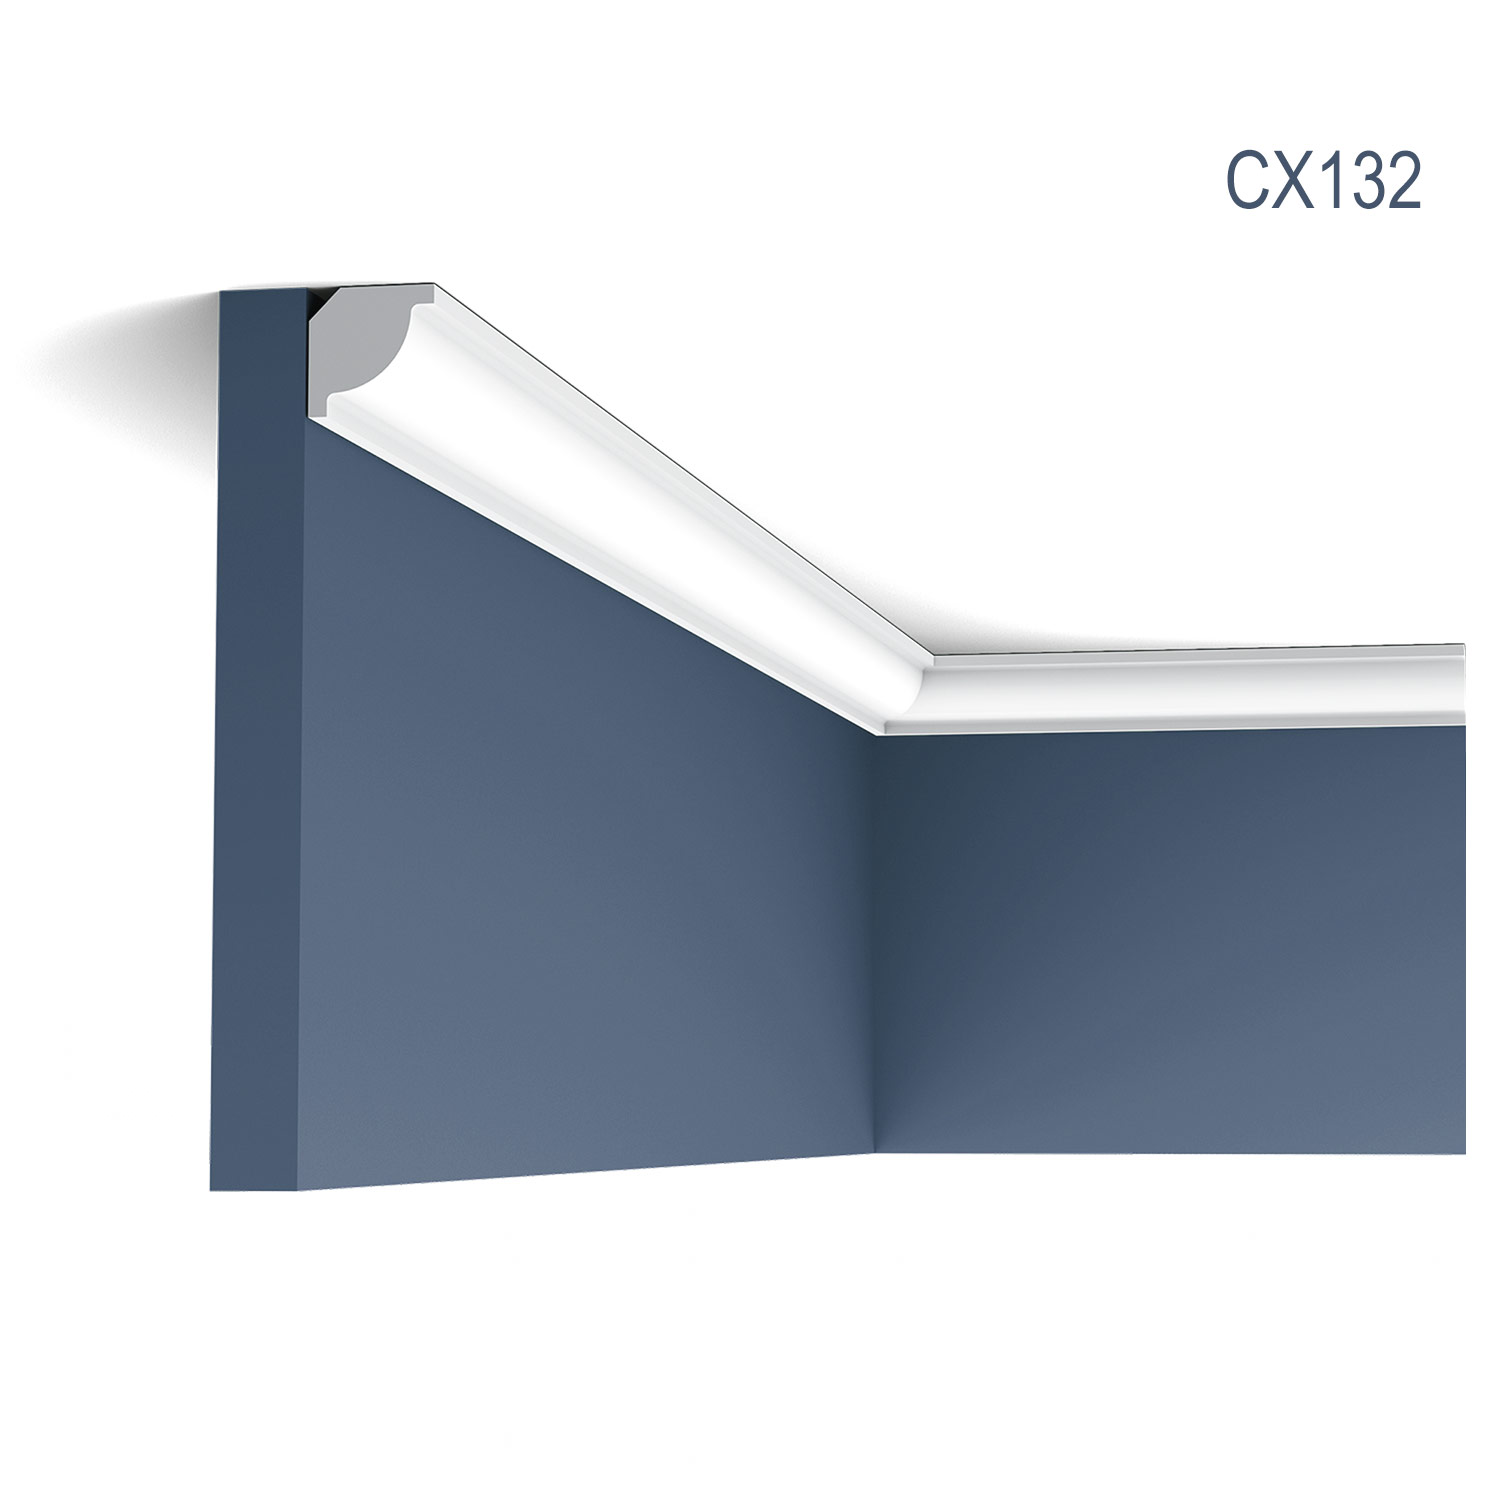 Cornisa Axxent CX132, Dimensiuni: 200 X 2 X 2 cm, Orac Decor Orac Decor